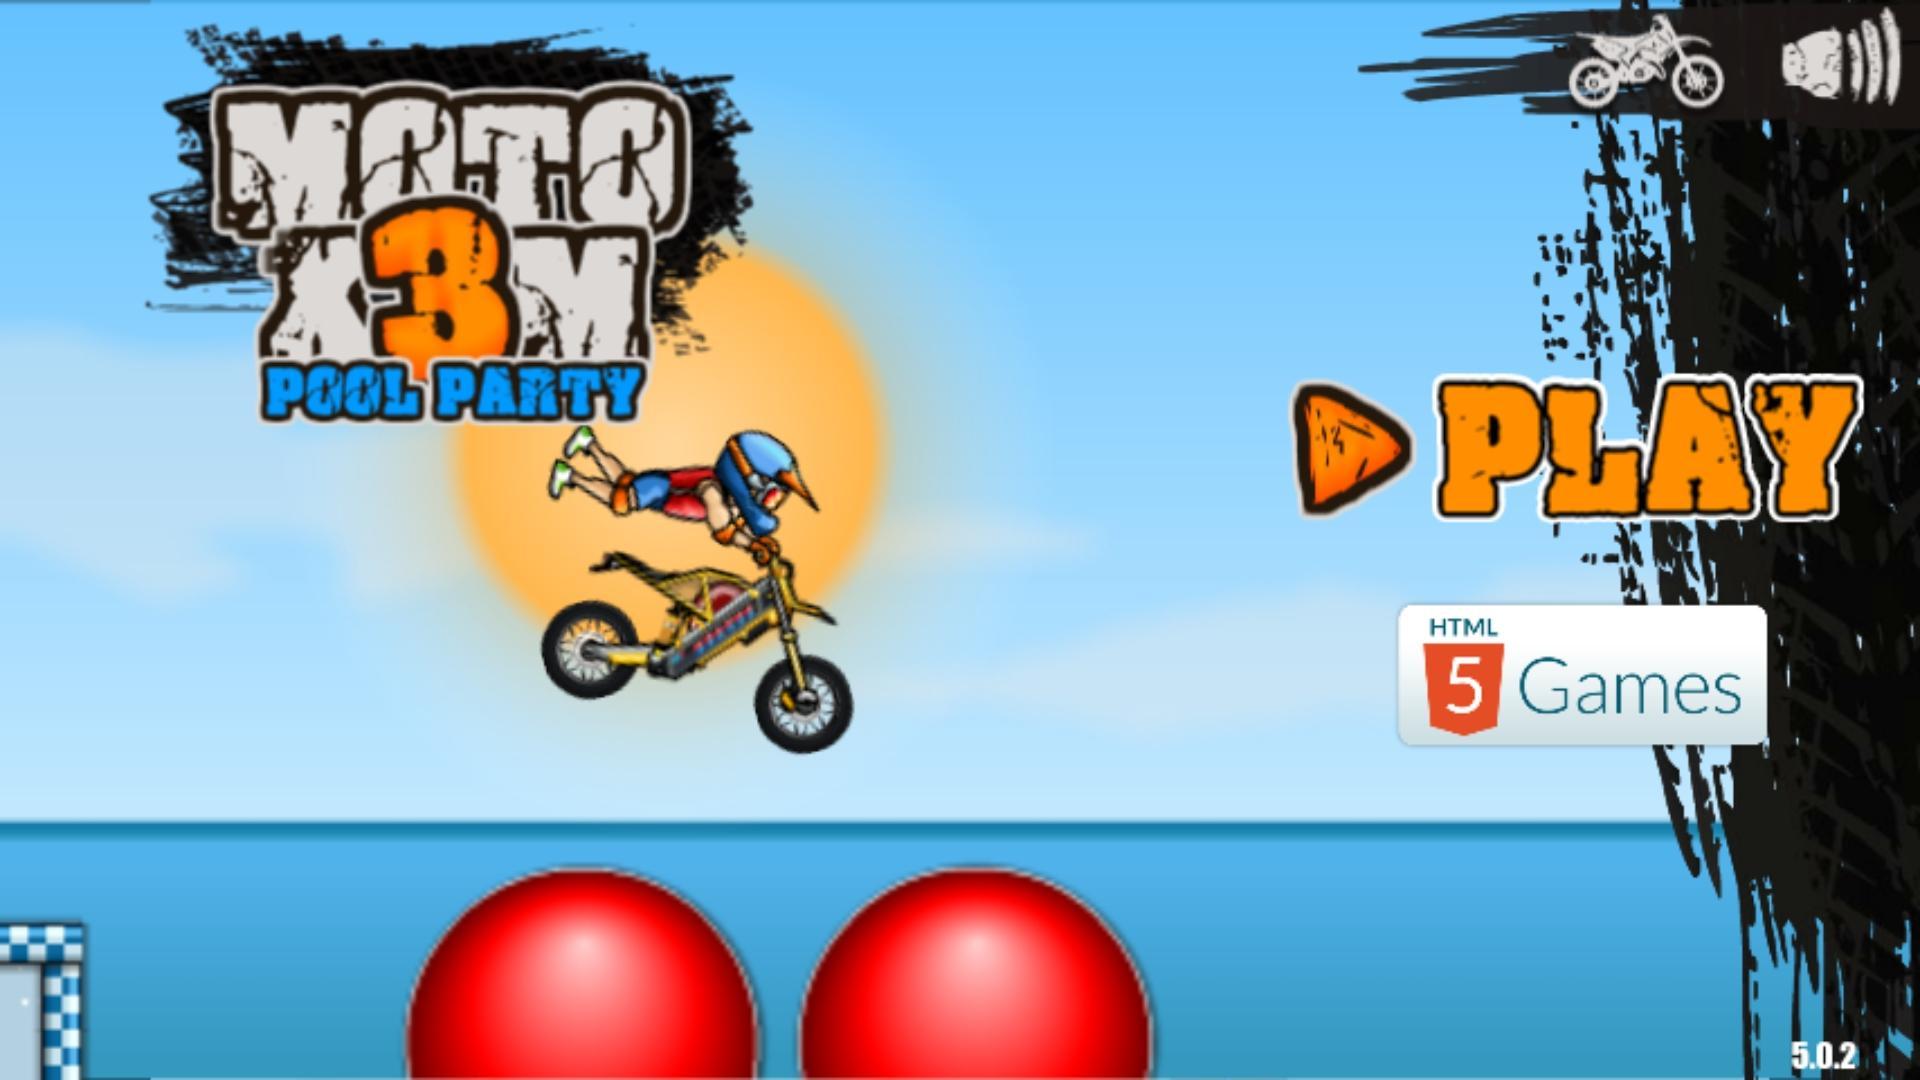 moto x3m bike race game mod apk download